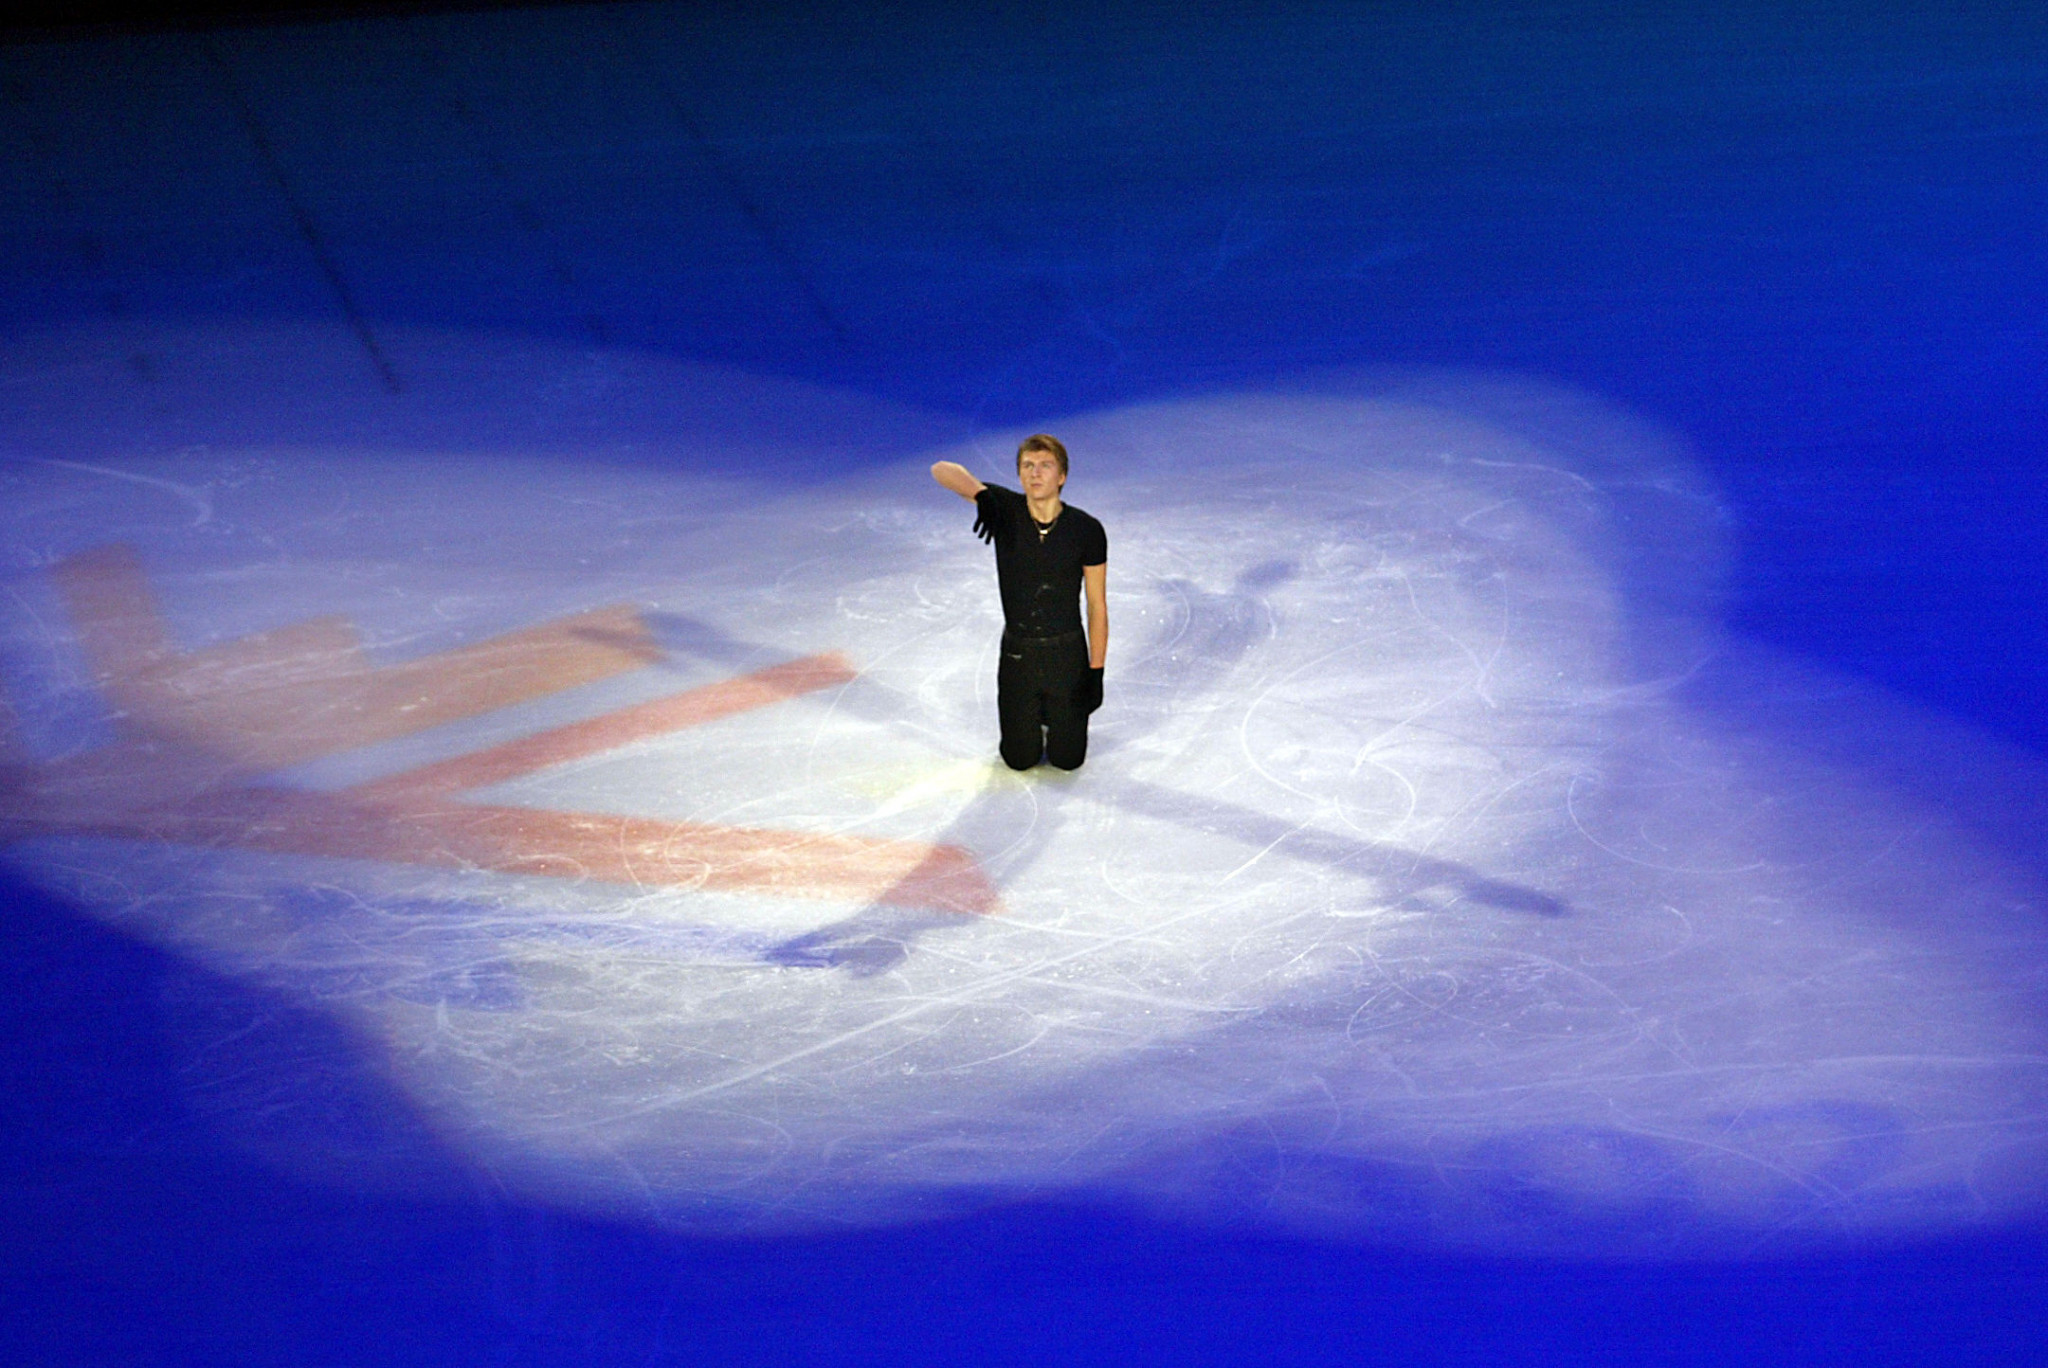 Azerbaijan's Tunzale Agaeva joins Russia's Olympic figure skating gold medallist Alexei Yagudin as a Minsk 2019 star ambassador ©Getty Images